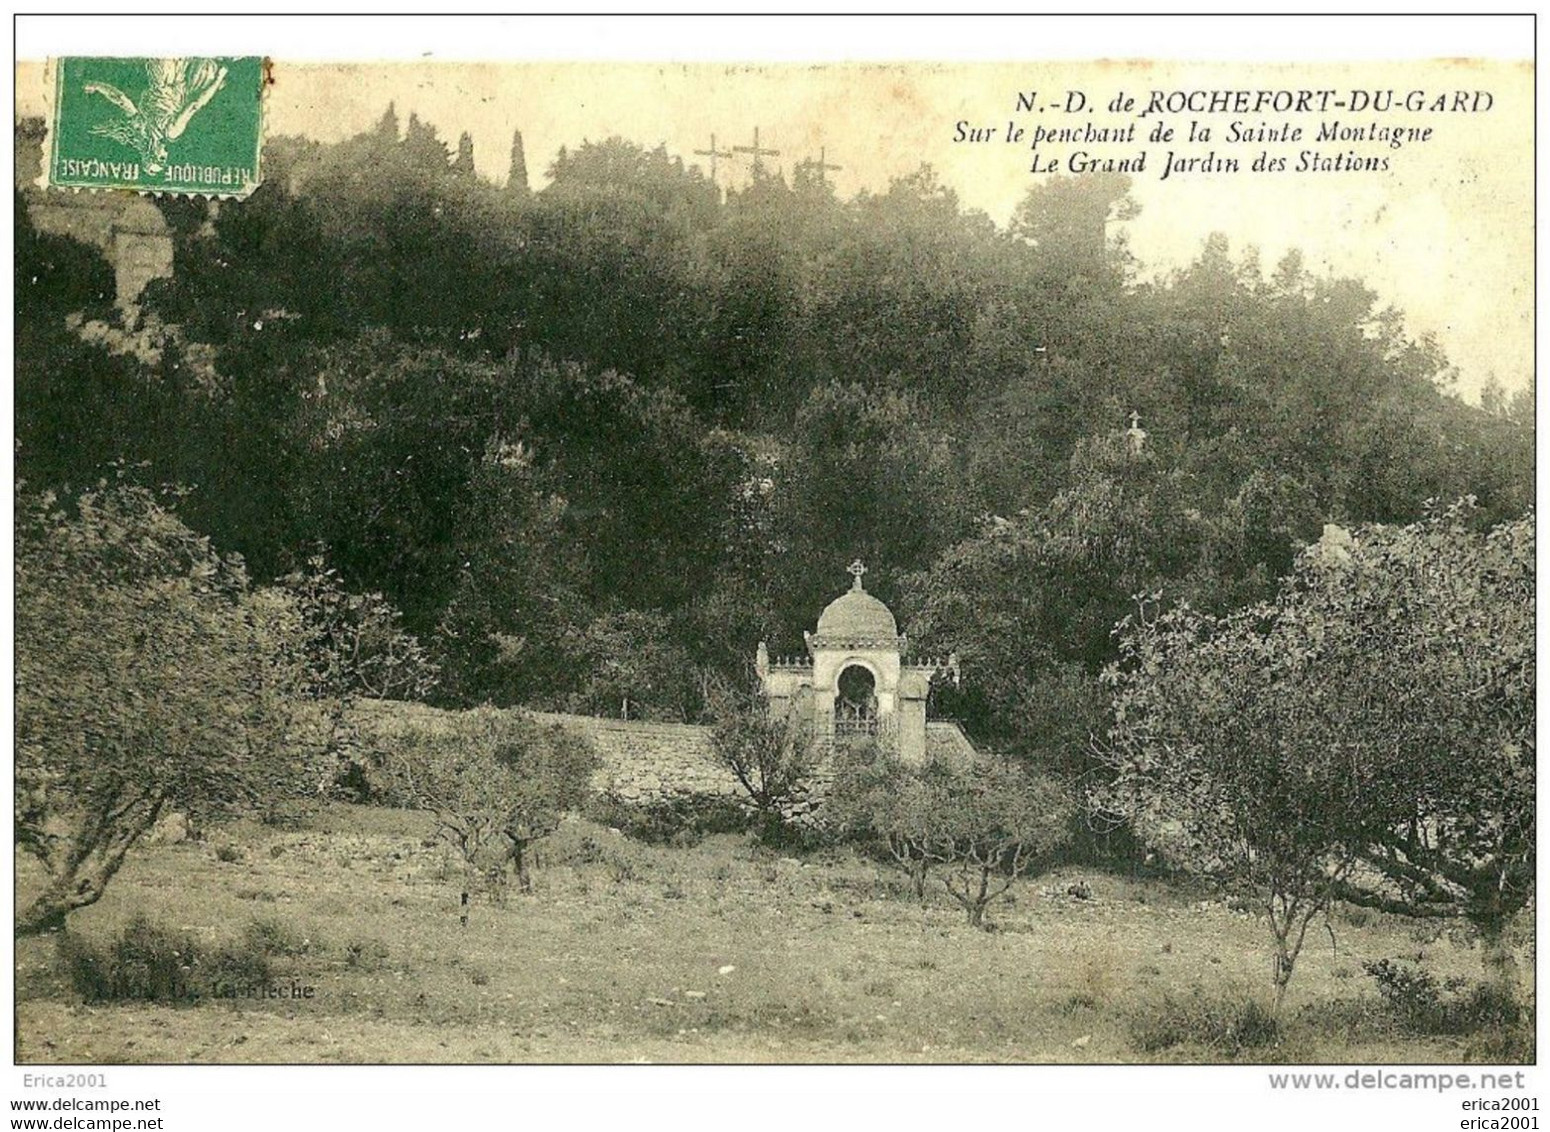 Rochefort-du-Gard. Notre Dame De Rochefort Du Gard Et Le Grand Jardin Des Stations. - Rochefort-du-Gard